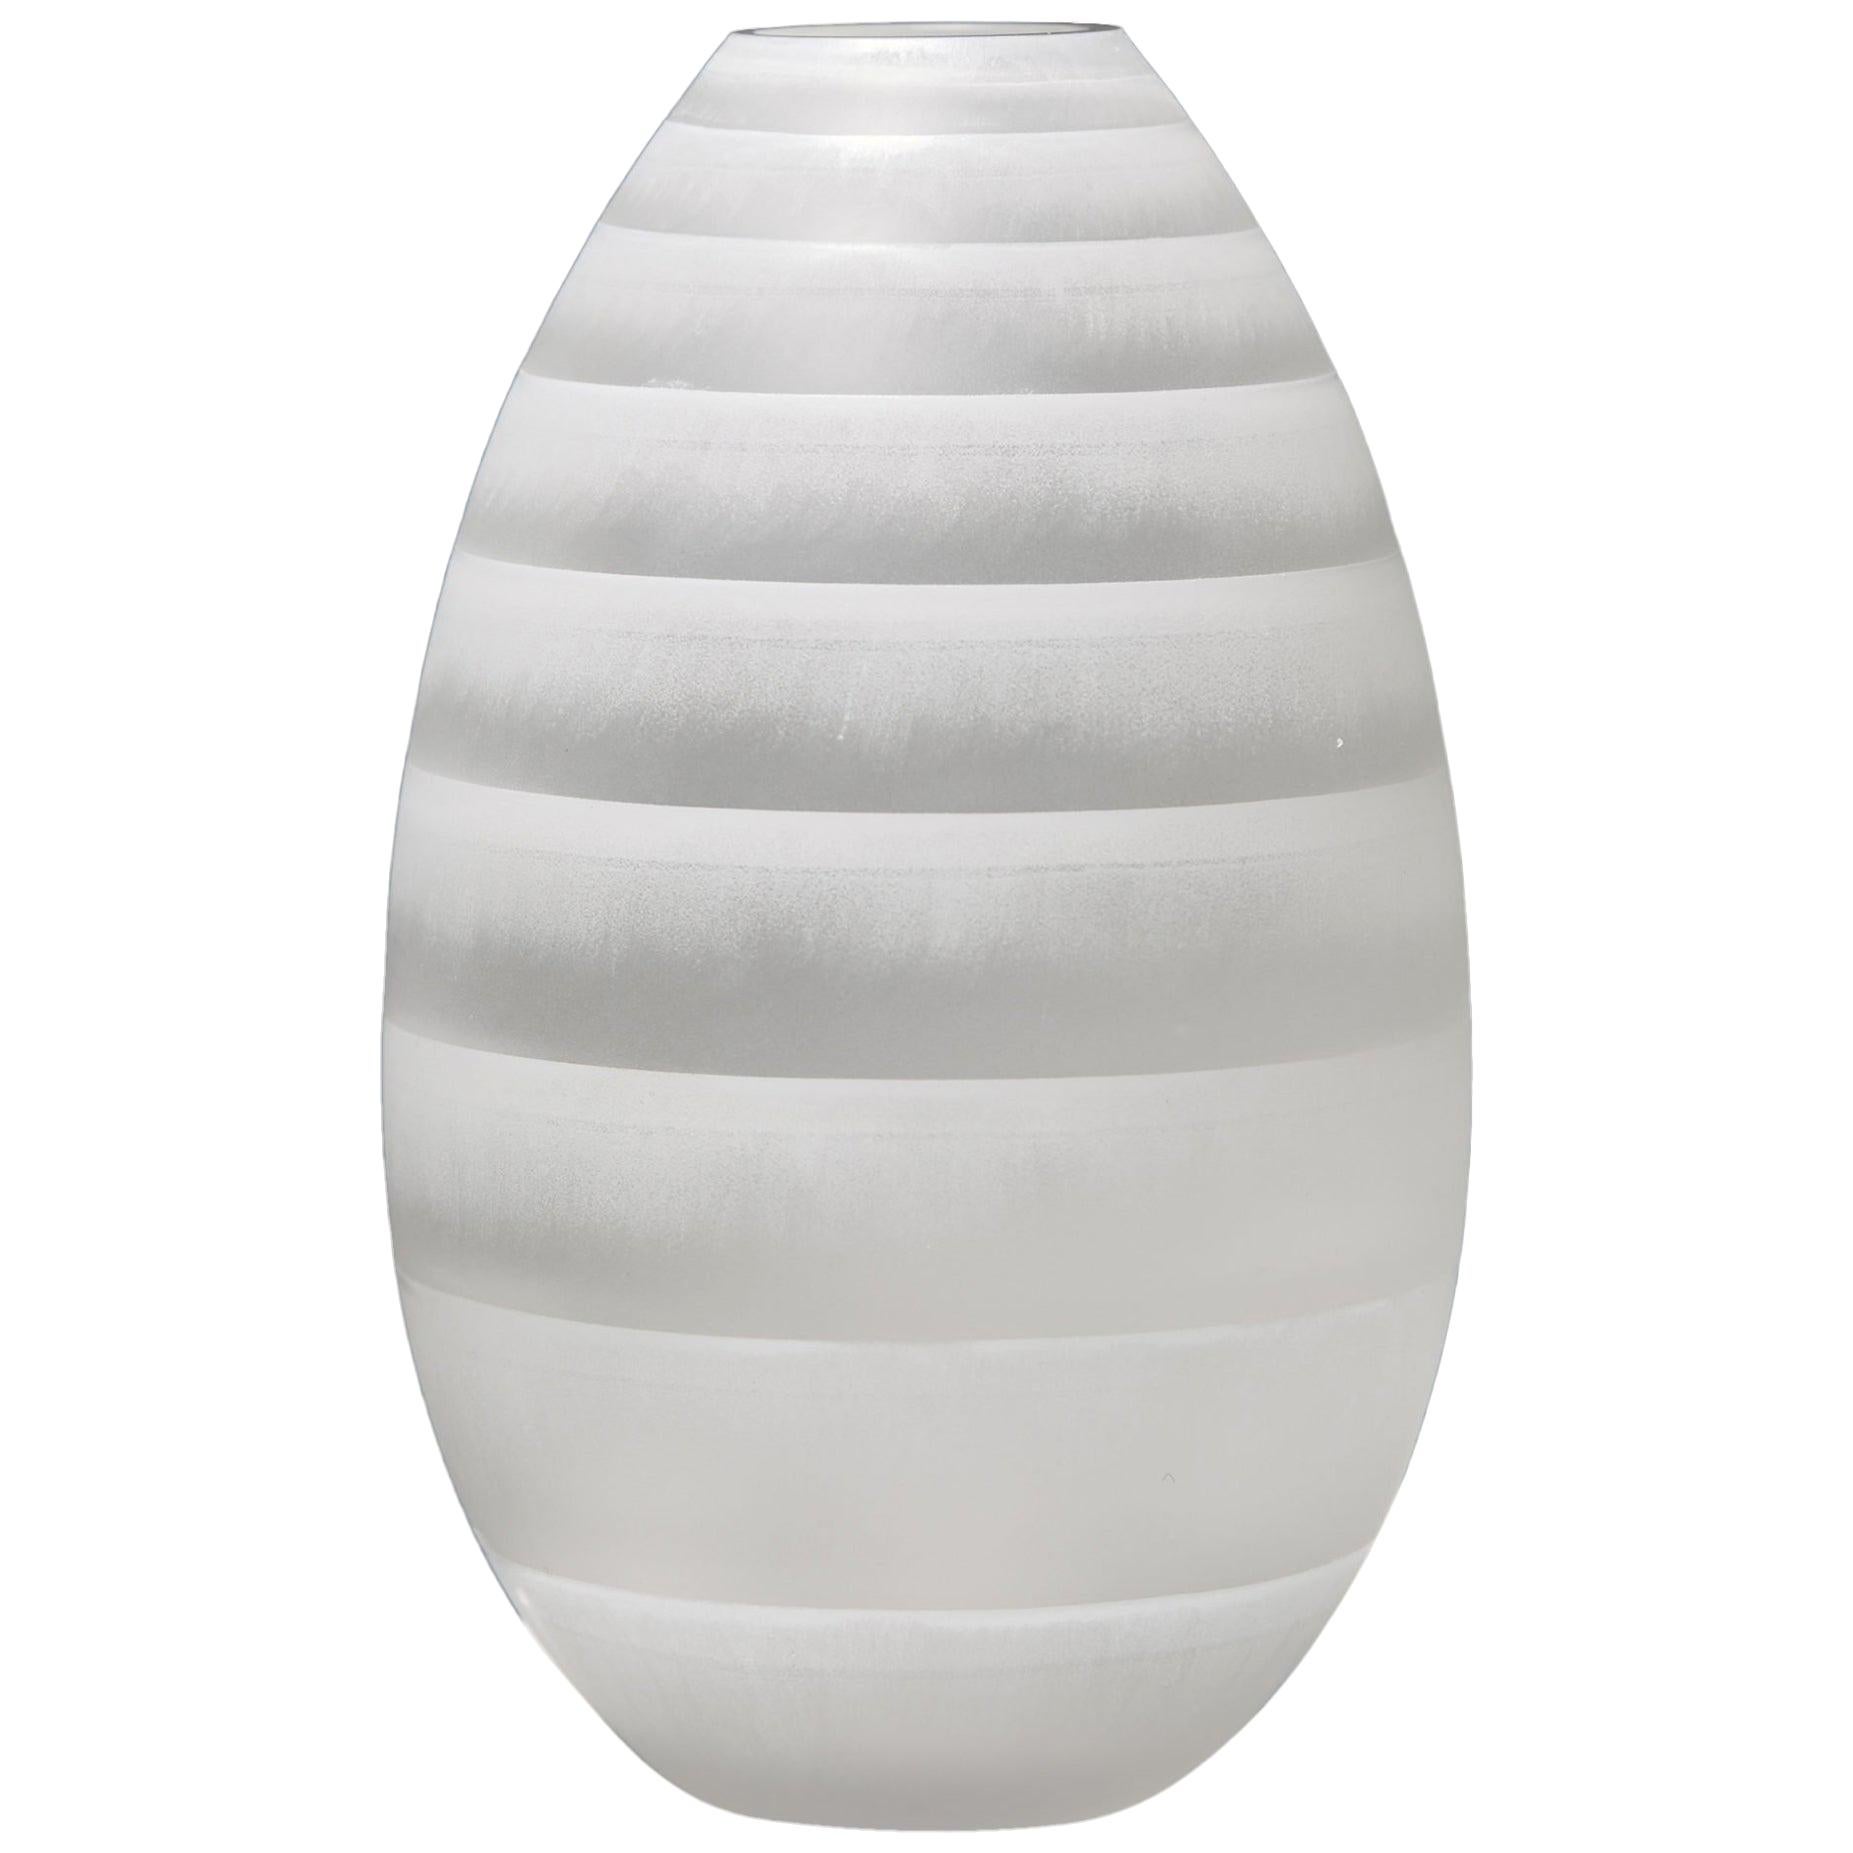 Vase “Bonbon” Designed by Ingegerd Råman for Orrefors, Sweden, 2010